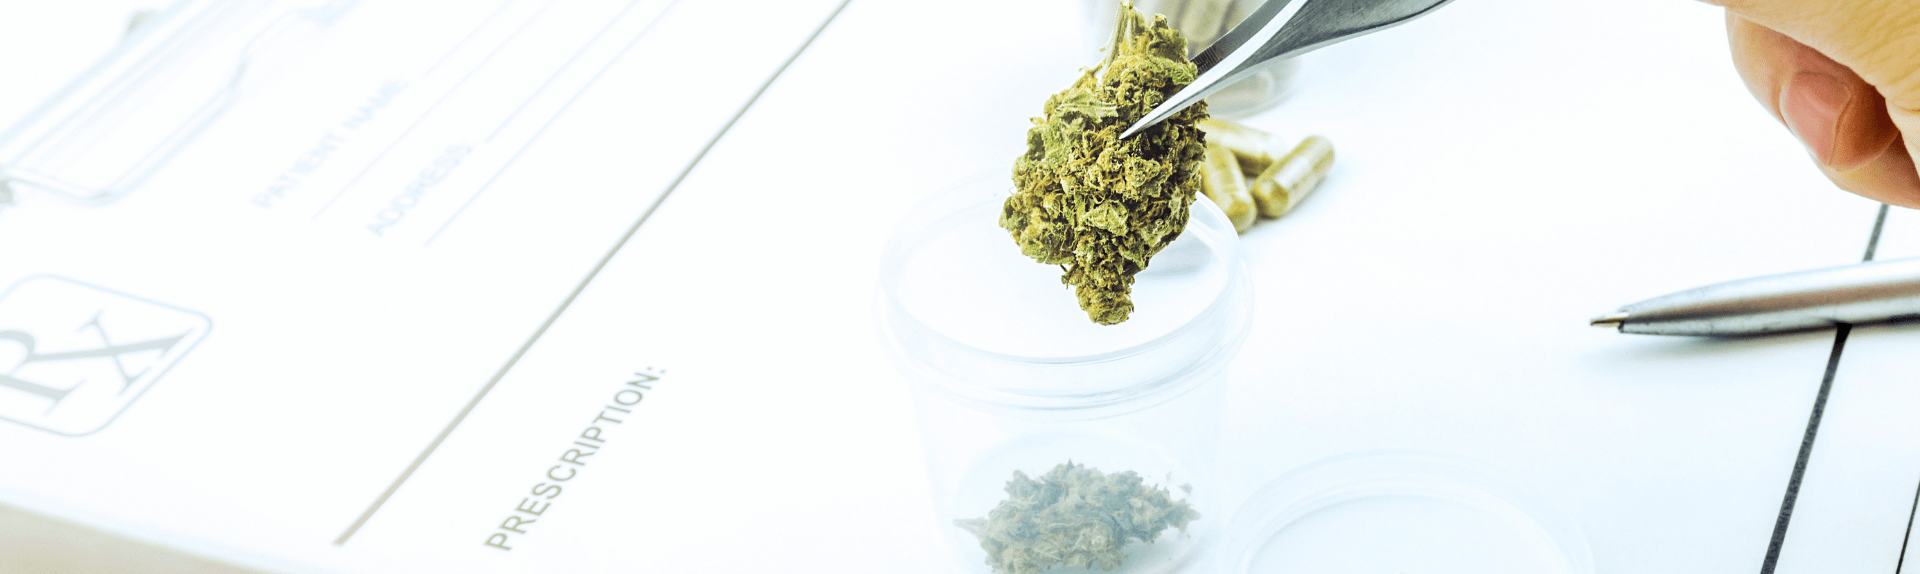 A Provider’s Take on Utah Medical Cannabis